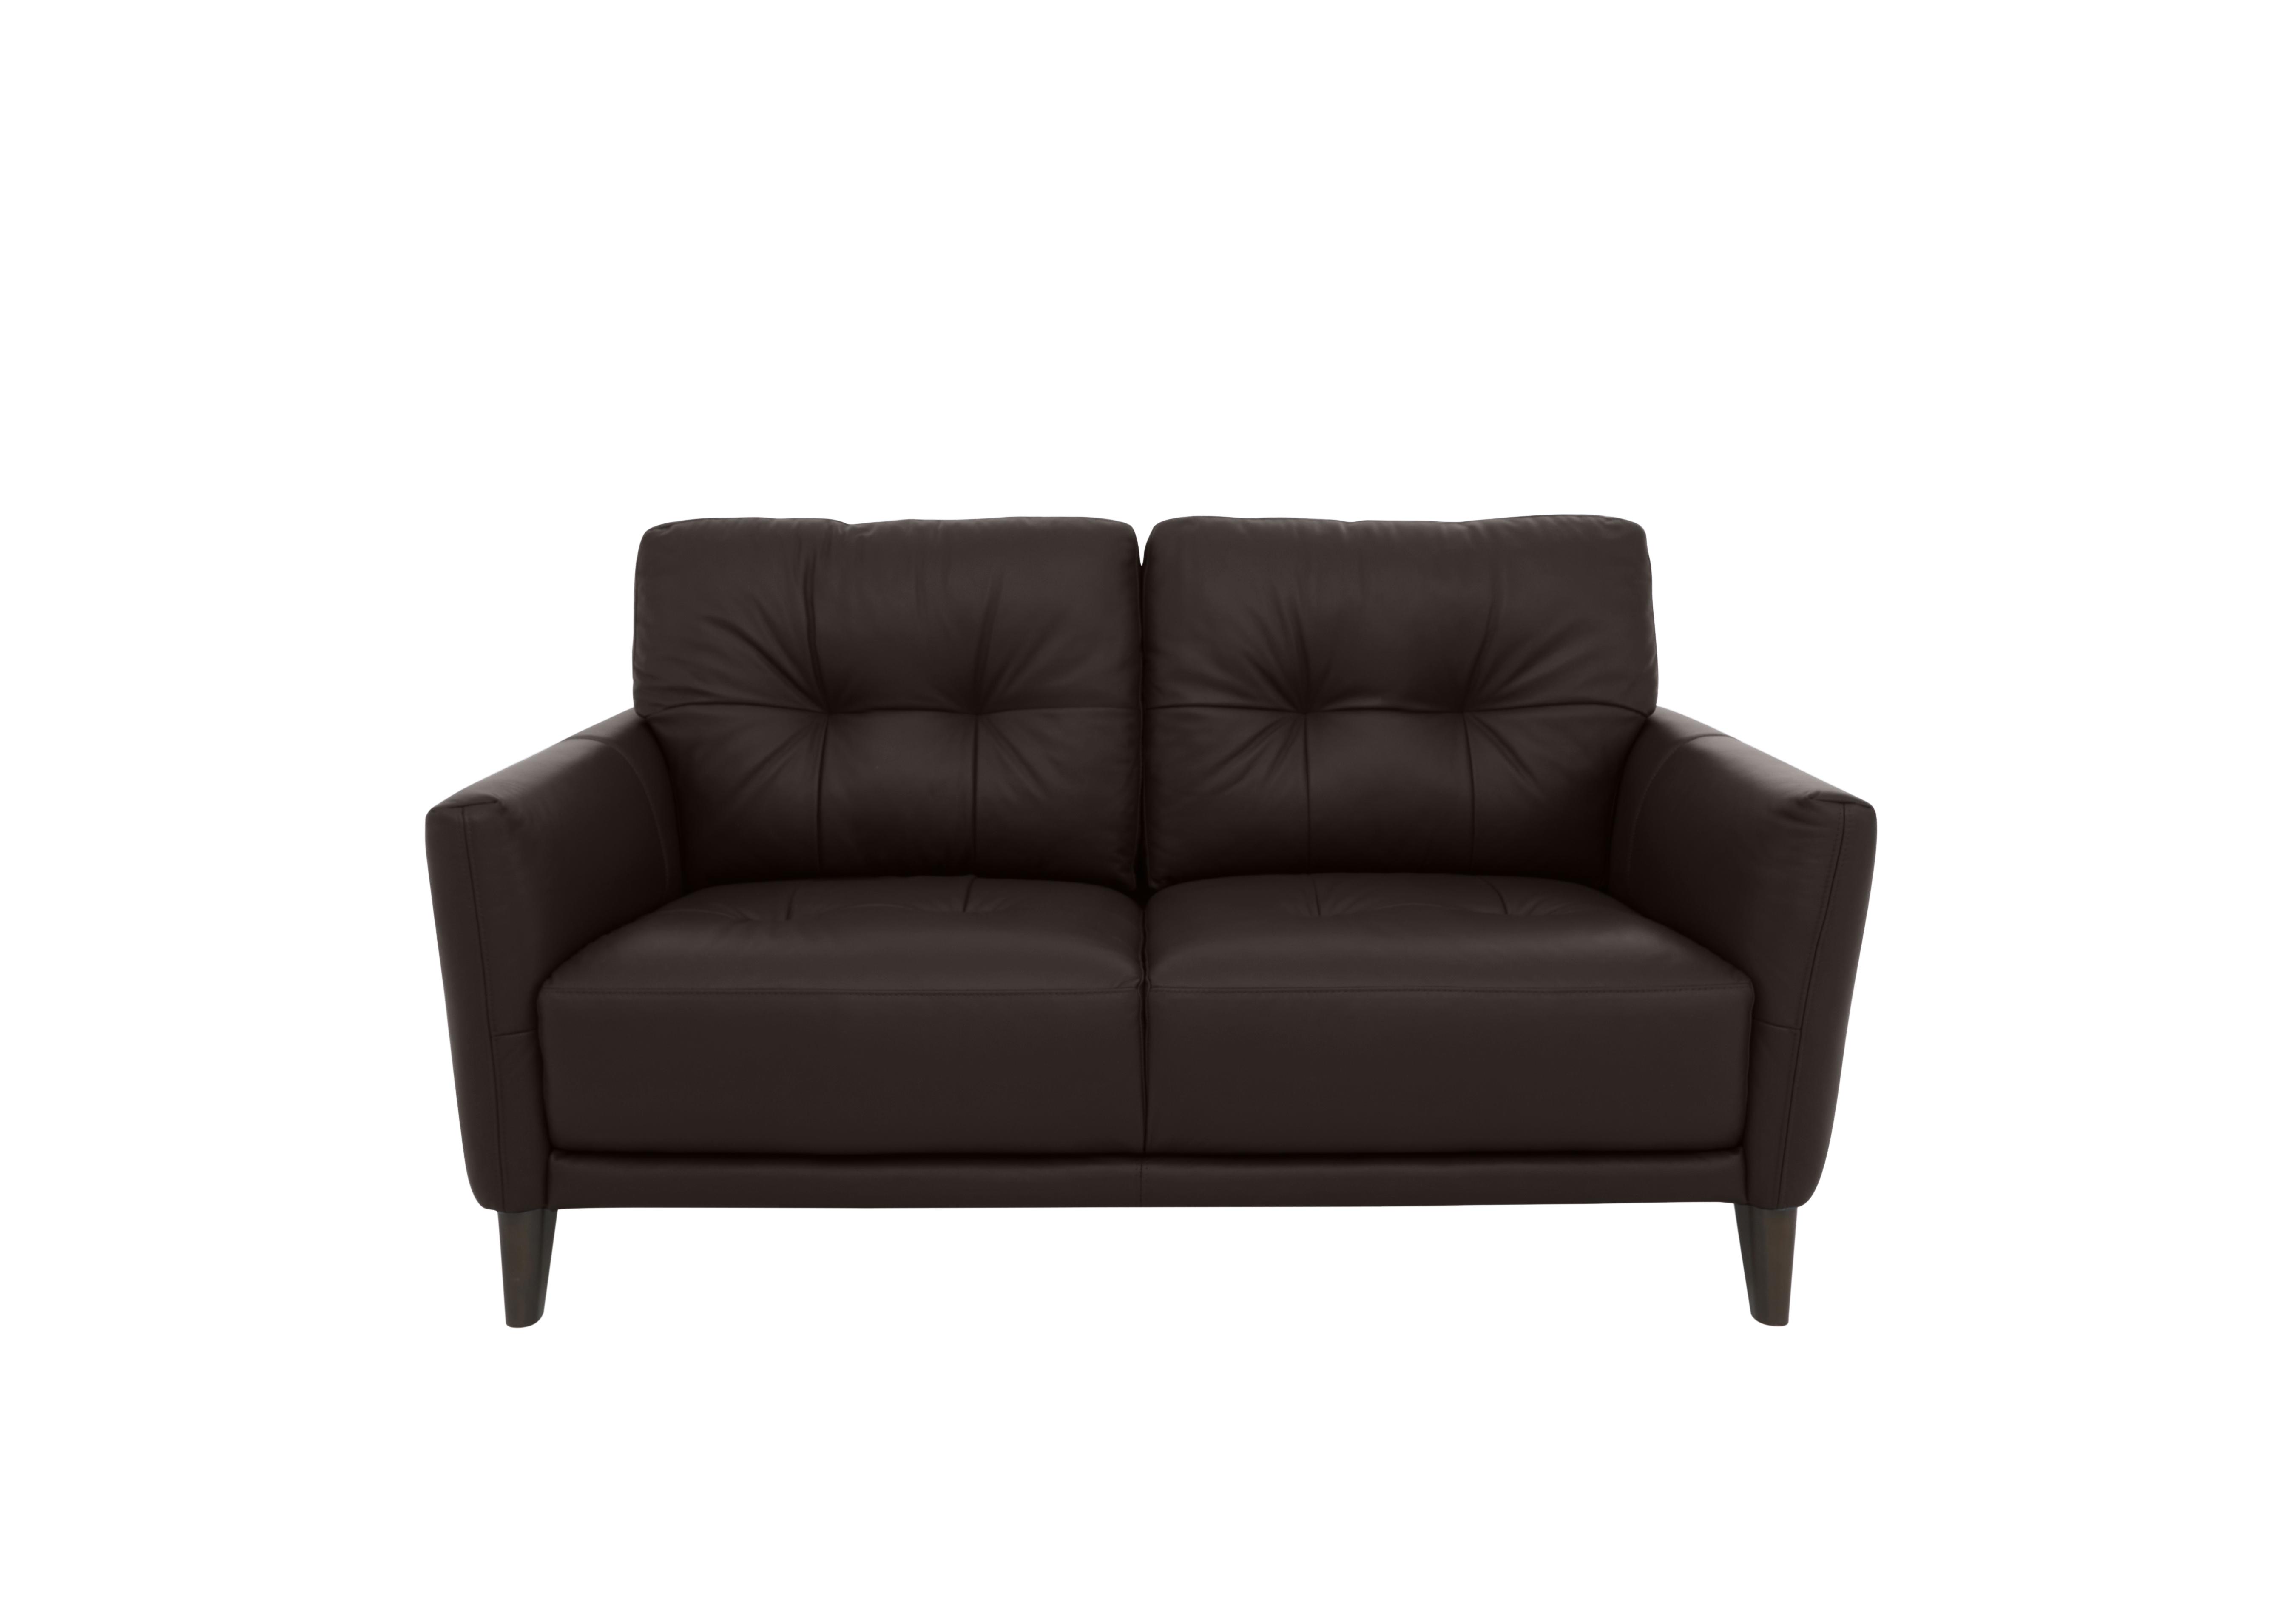 Uno Leather 2 Seater Sofa in Bv-1748 Dark Chocolate on Furniture Village